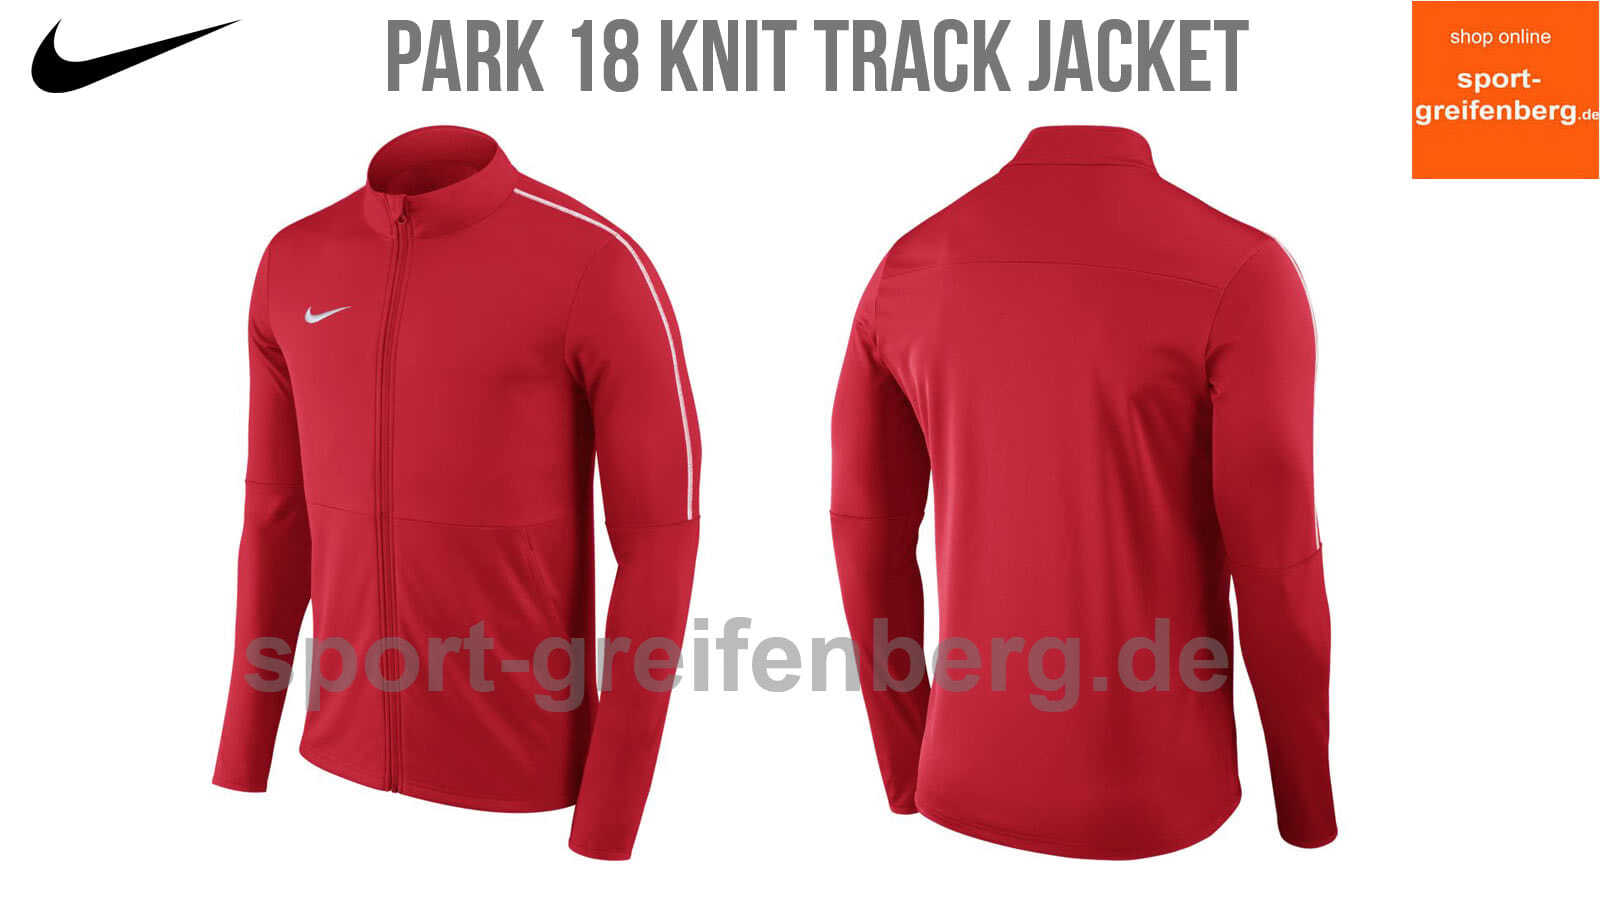 Die Nike Park 18 Knit Track Jacket als Trainingsjacke